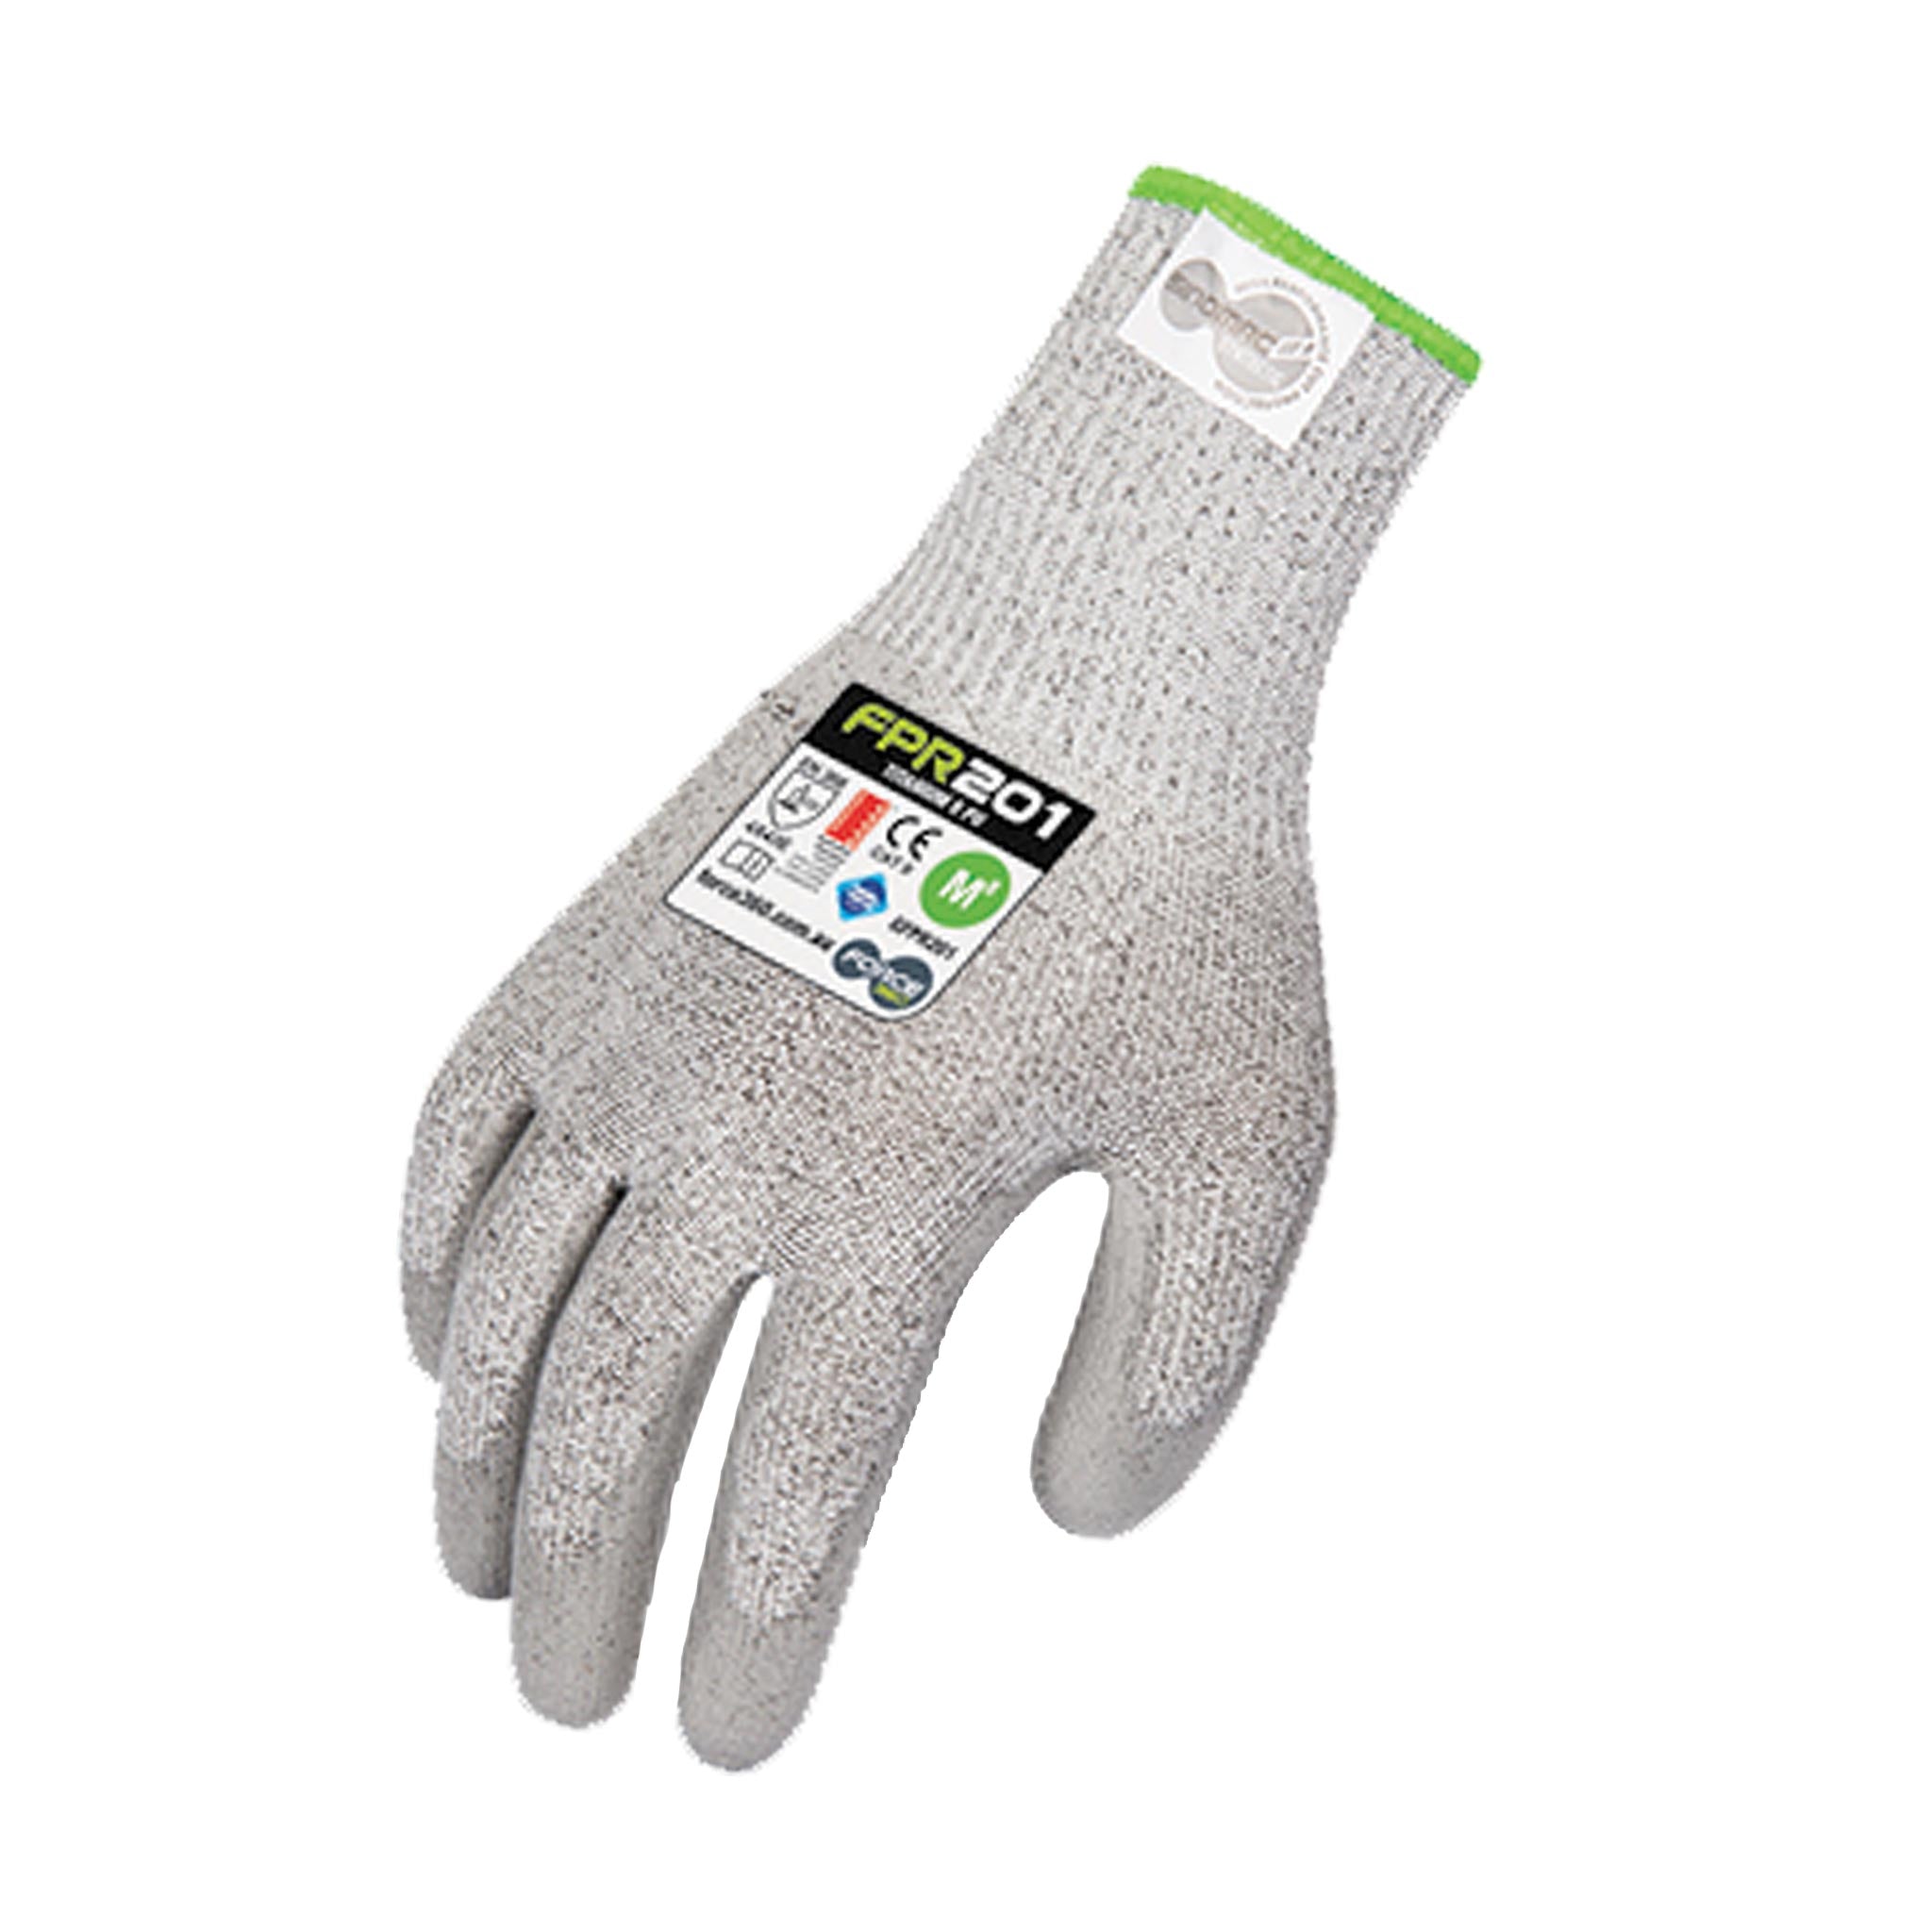 titanium 5 cut glove